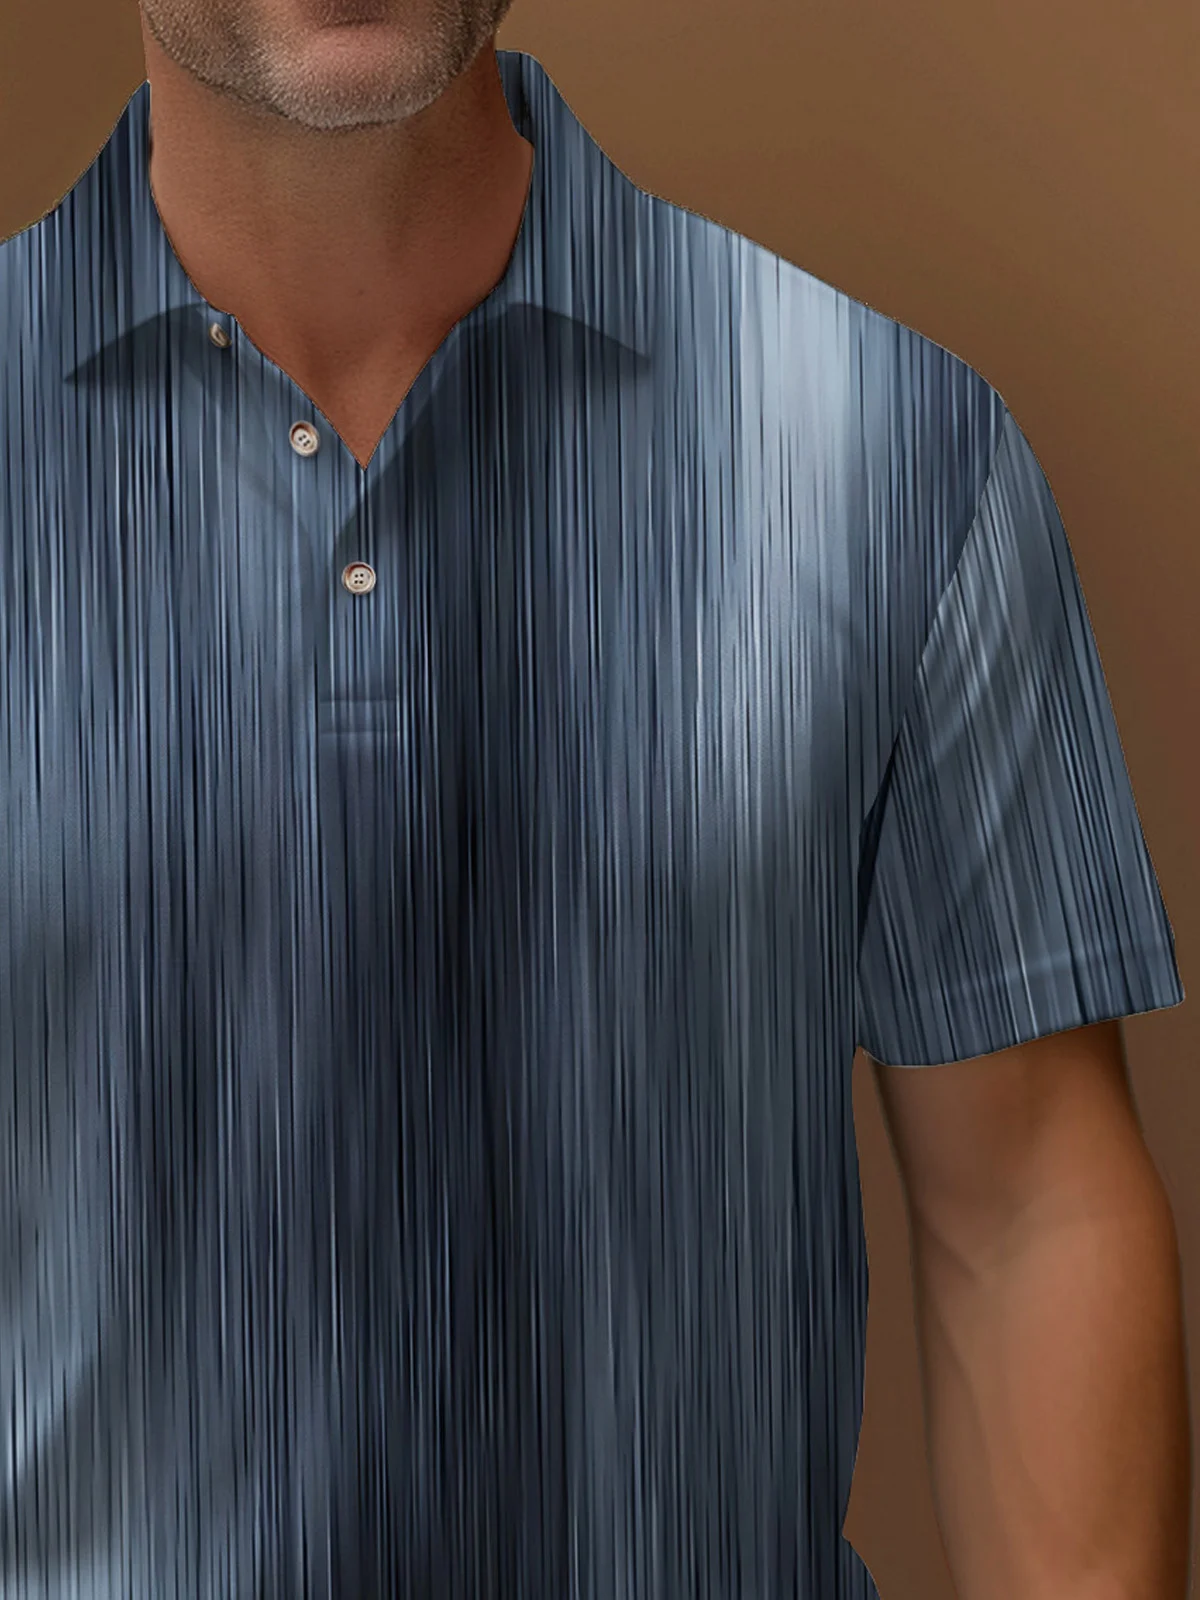 Royaura® Retro Textured Men's Polo Shirt Stretch Comfort Basic Short Sleeve Polo Shirt Big Tall